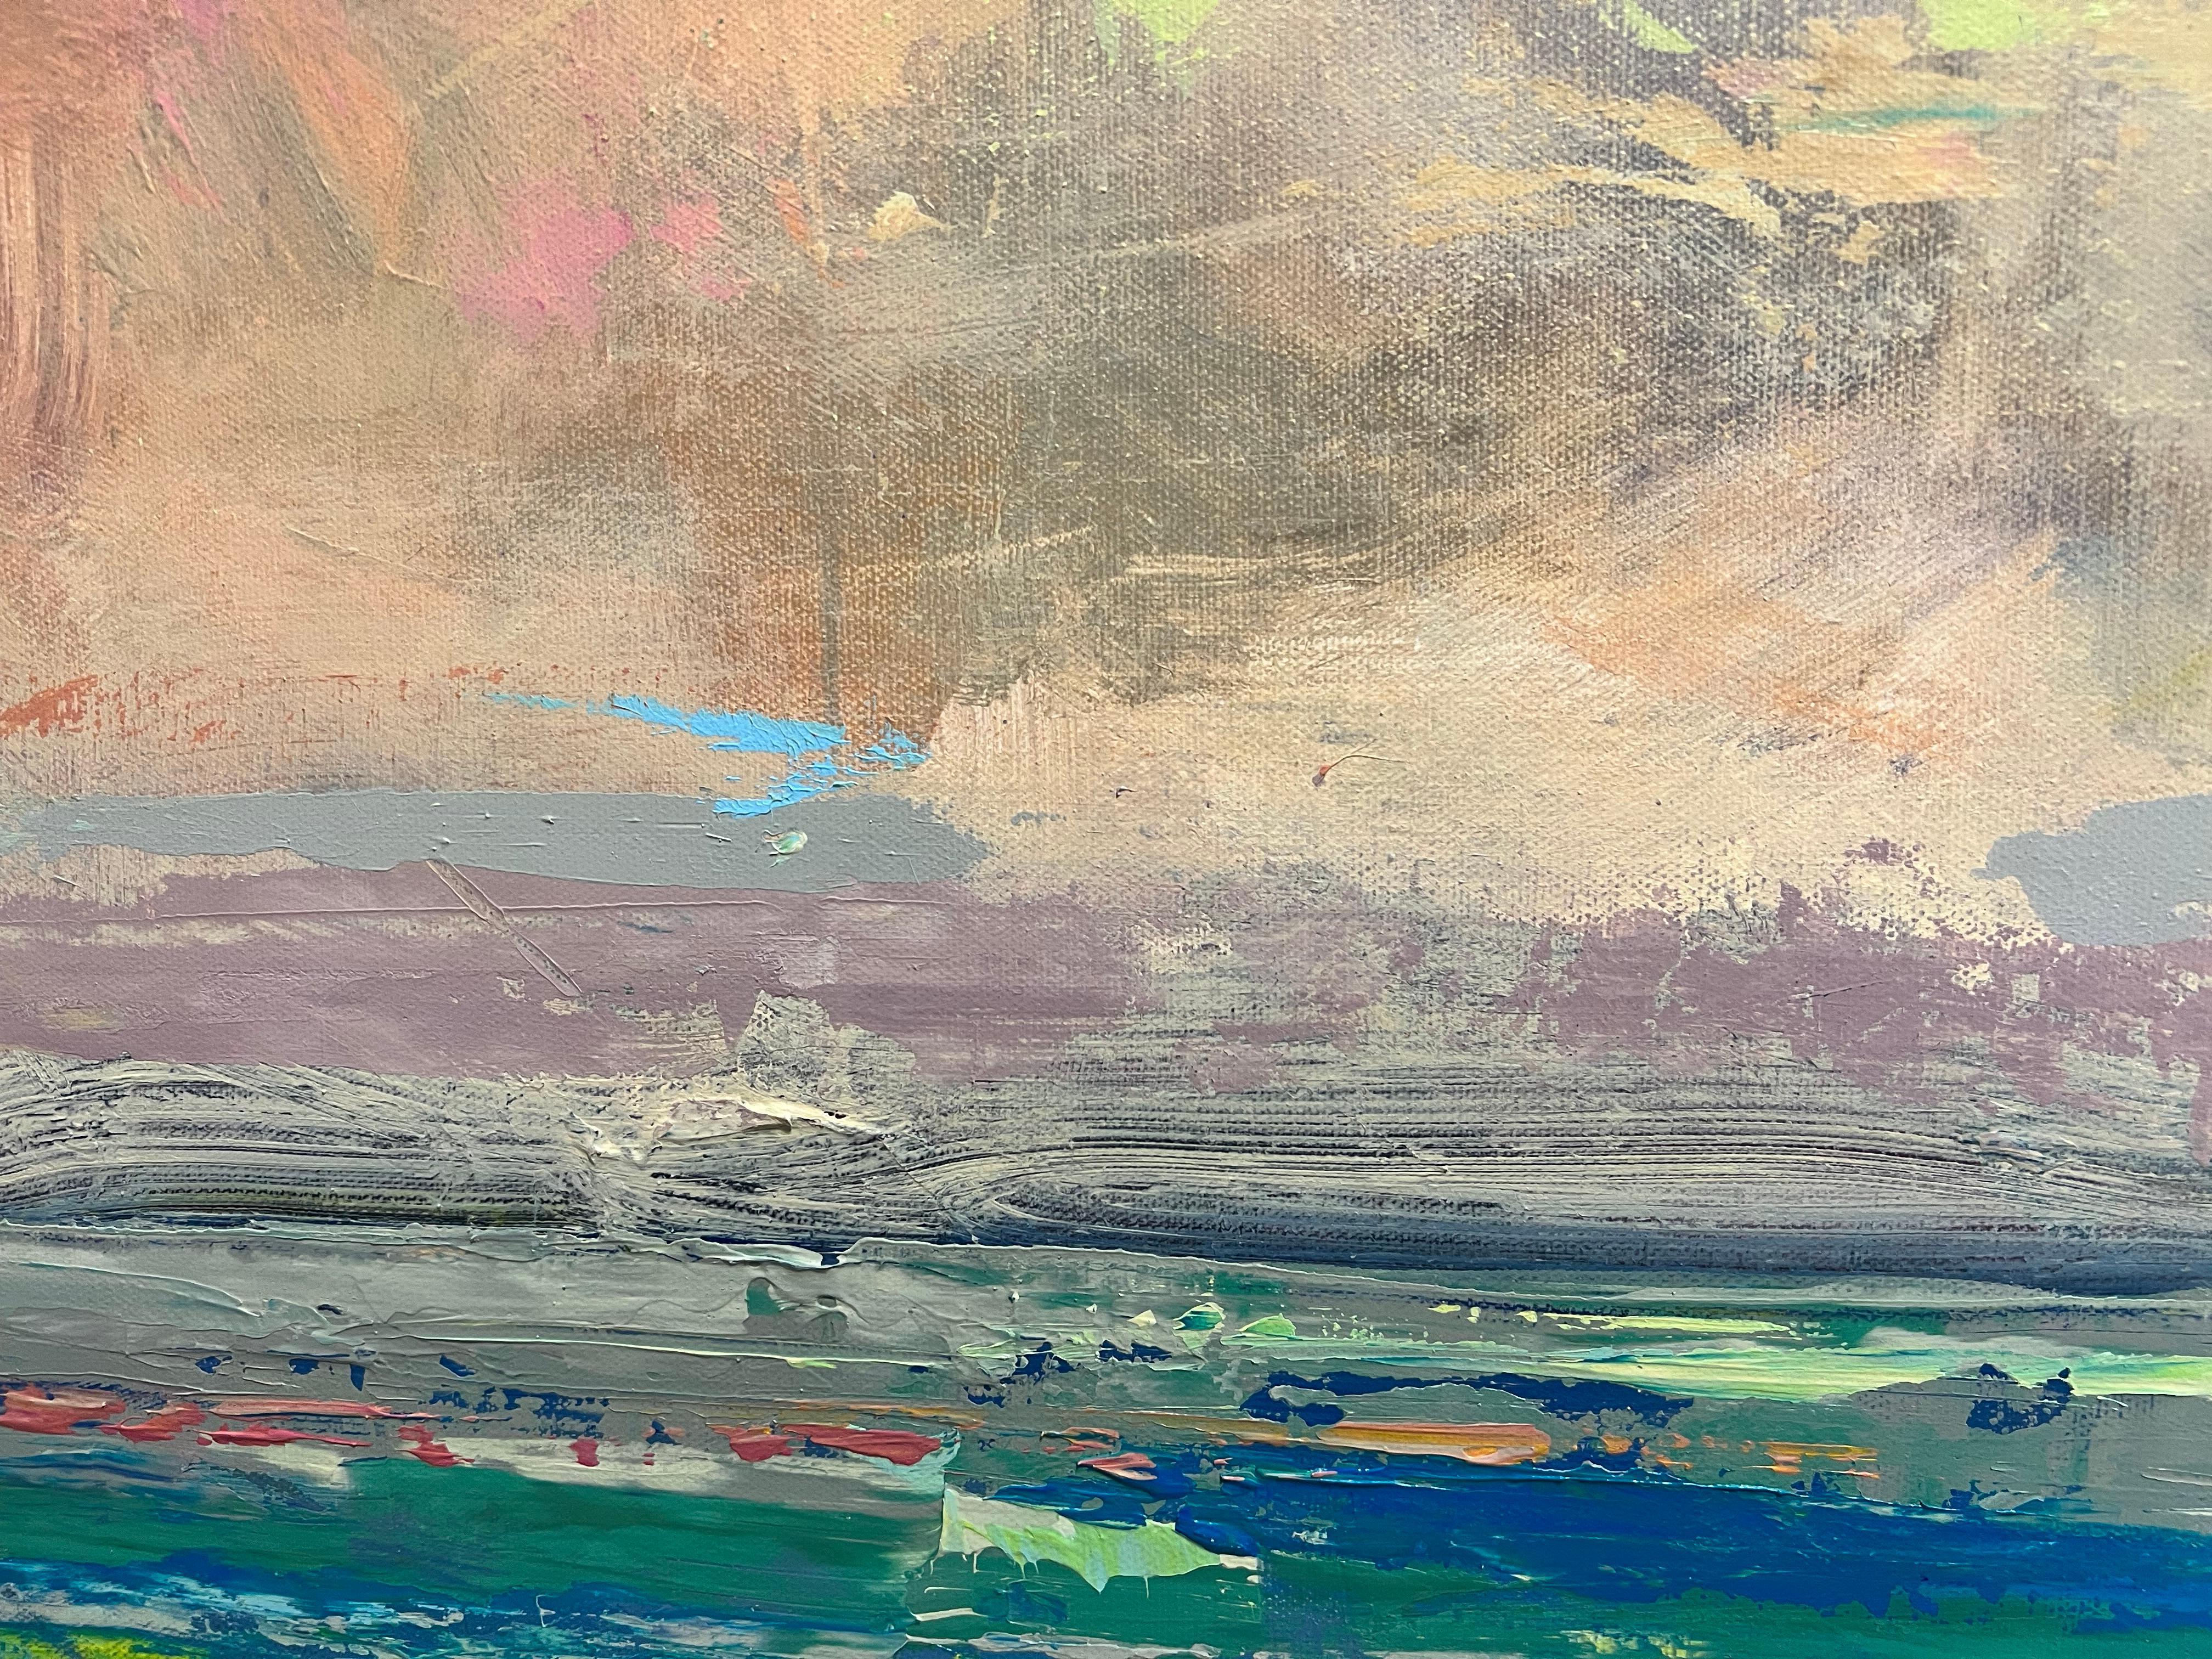 Deep Ocean Blues - Impressionist Painting by Noah Desmond